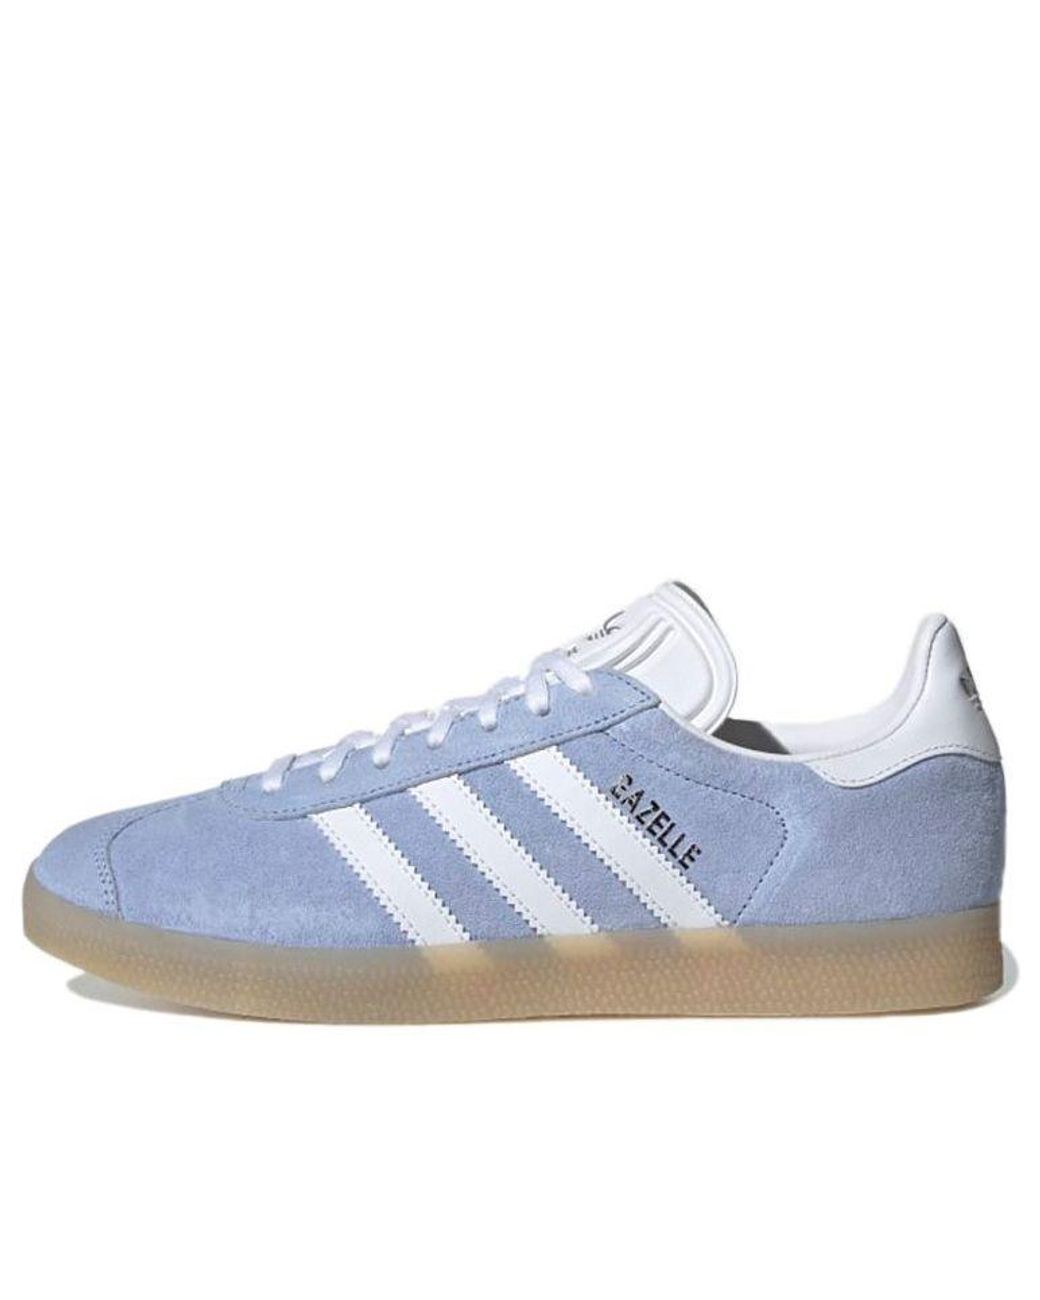 adidas Originals Gazelle Shoes Blue/white | Lyst